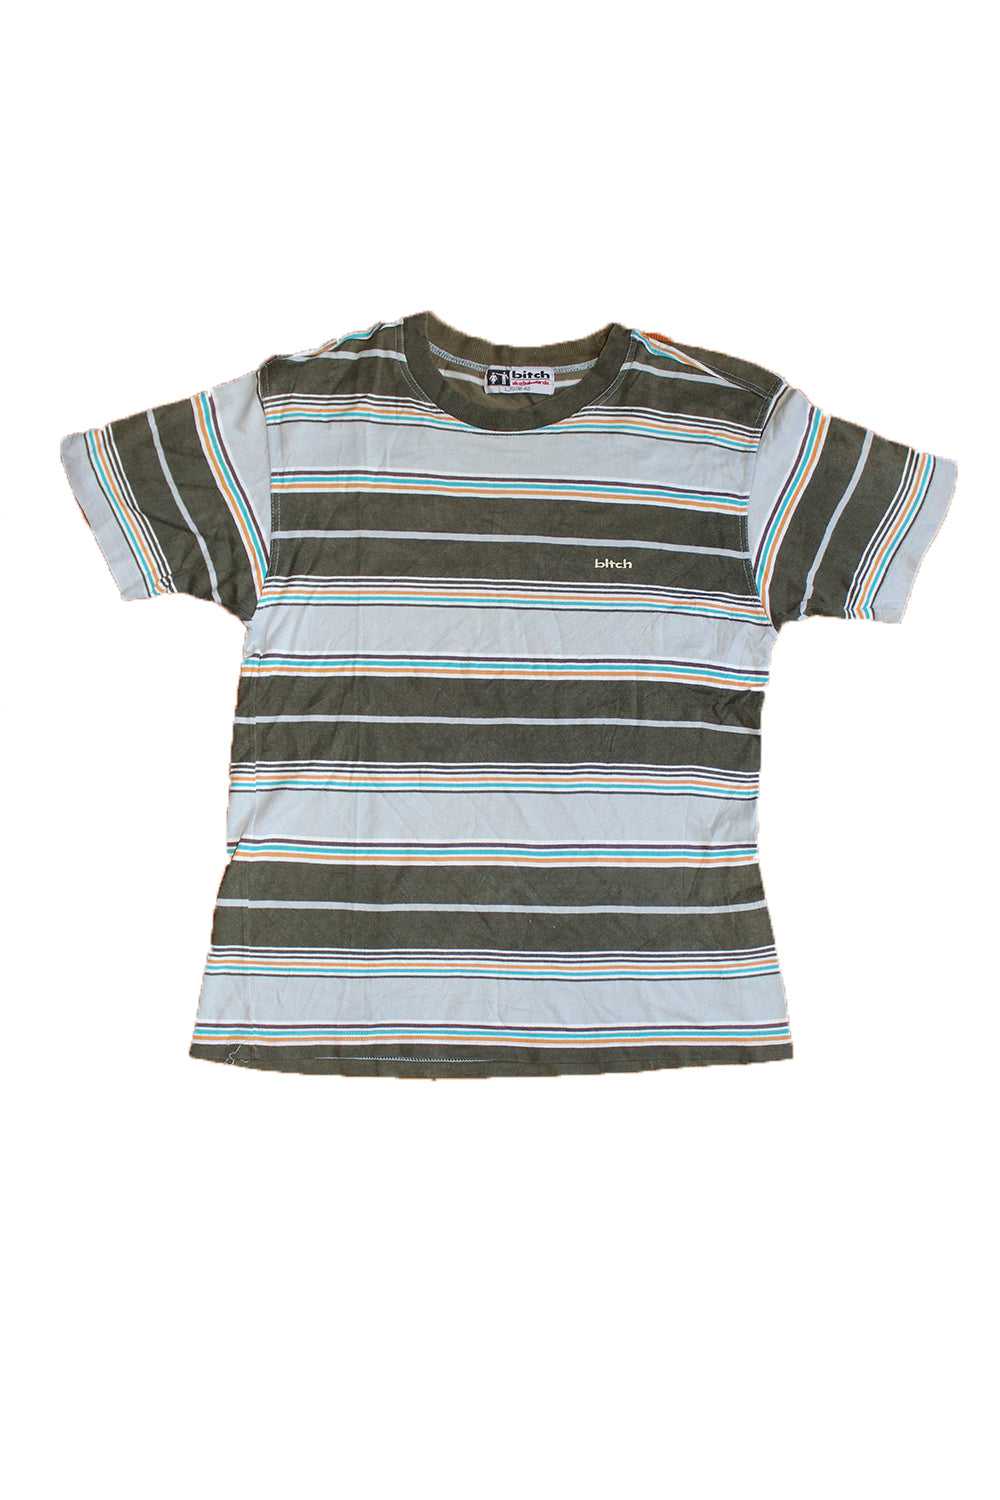 Vintage 90's BITCH Skateboards Striped T-shirt - image 1